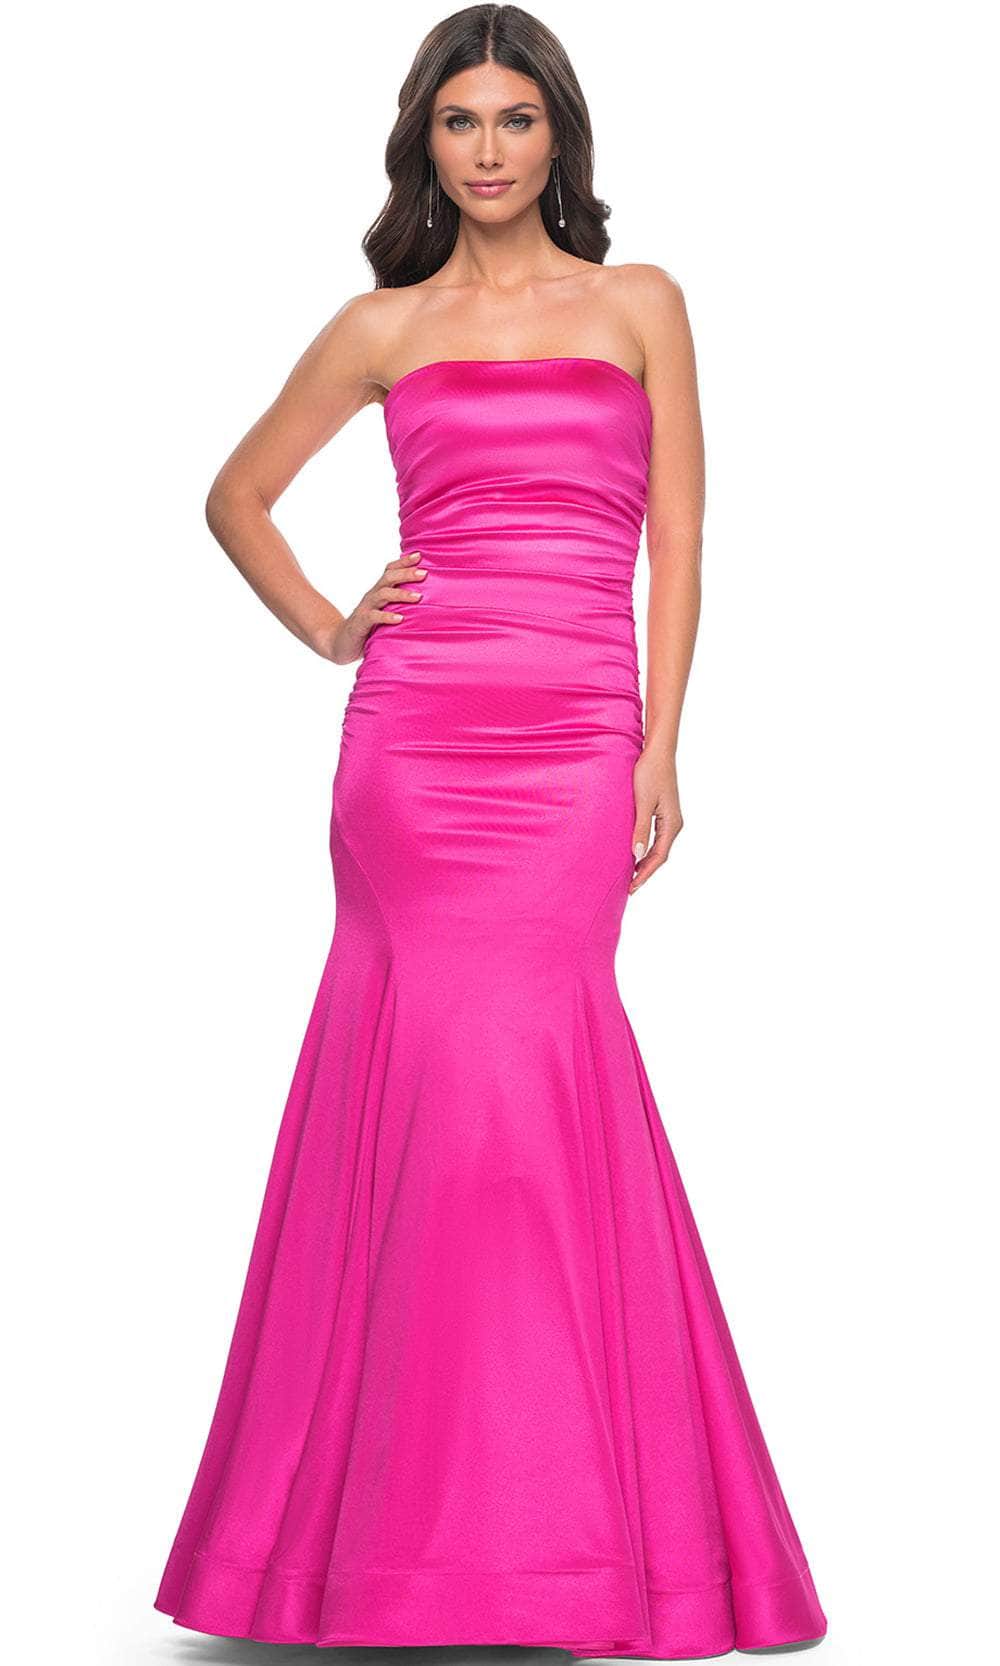 La Femme 31980 - Satin Mermaid Prom Dress Prom Dresses 00 / Hot Pink